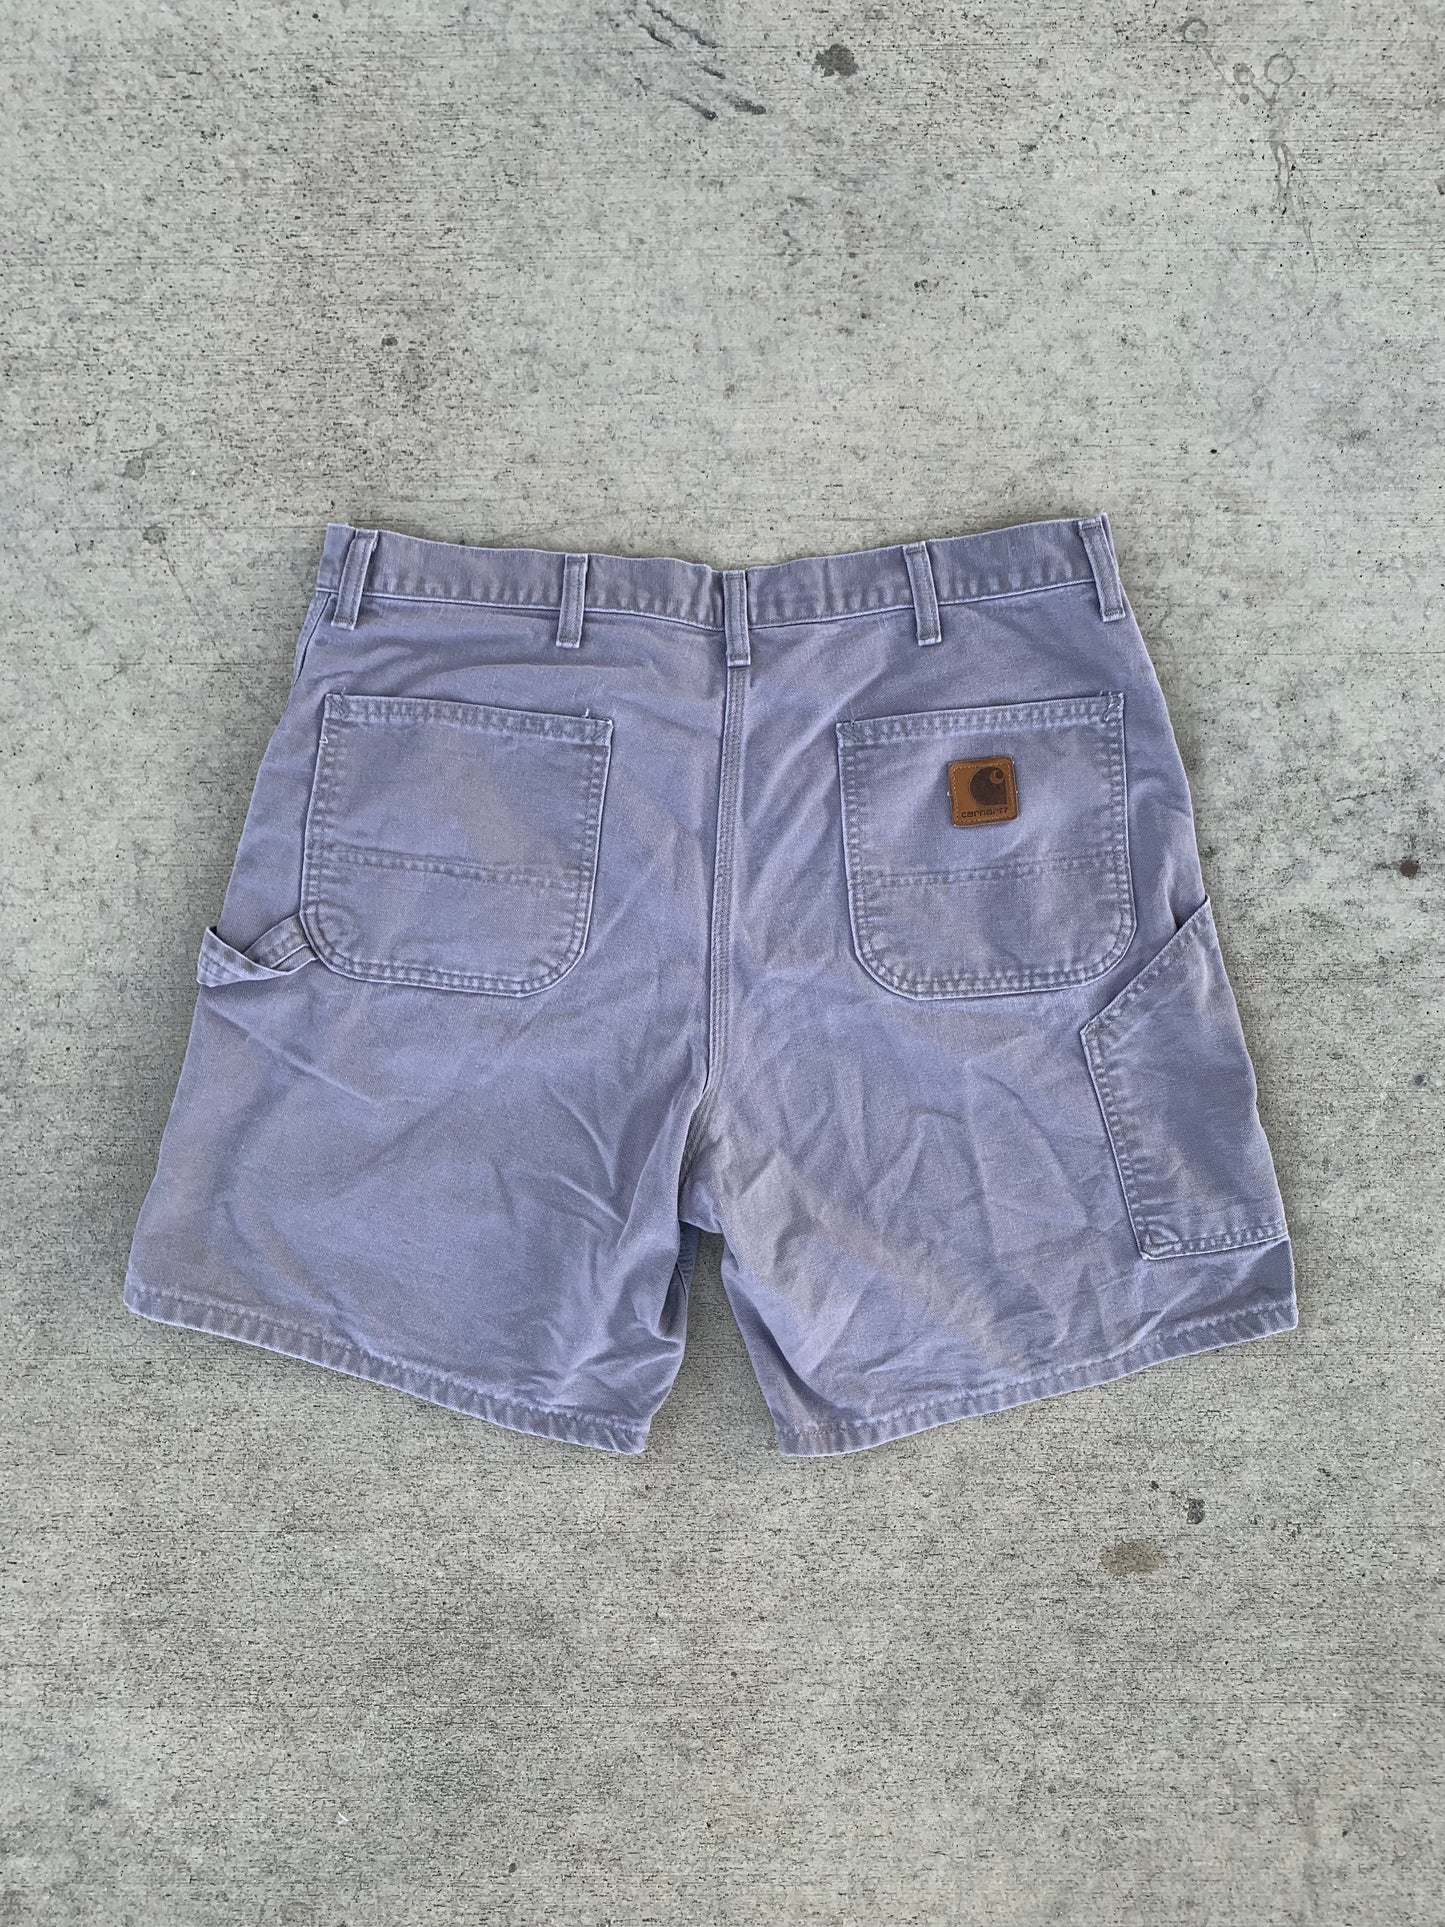 Gray Carhartt Shorts